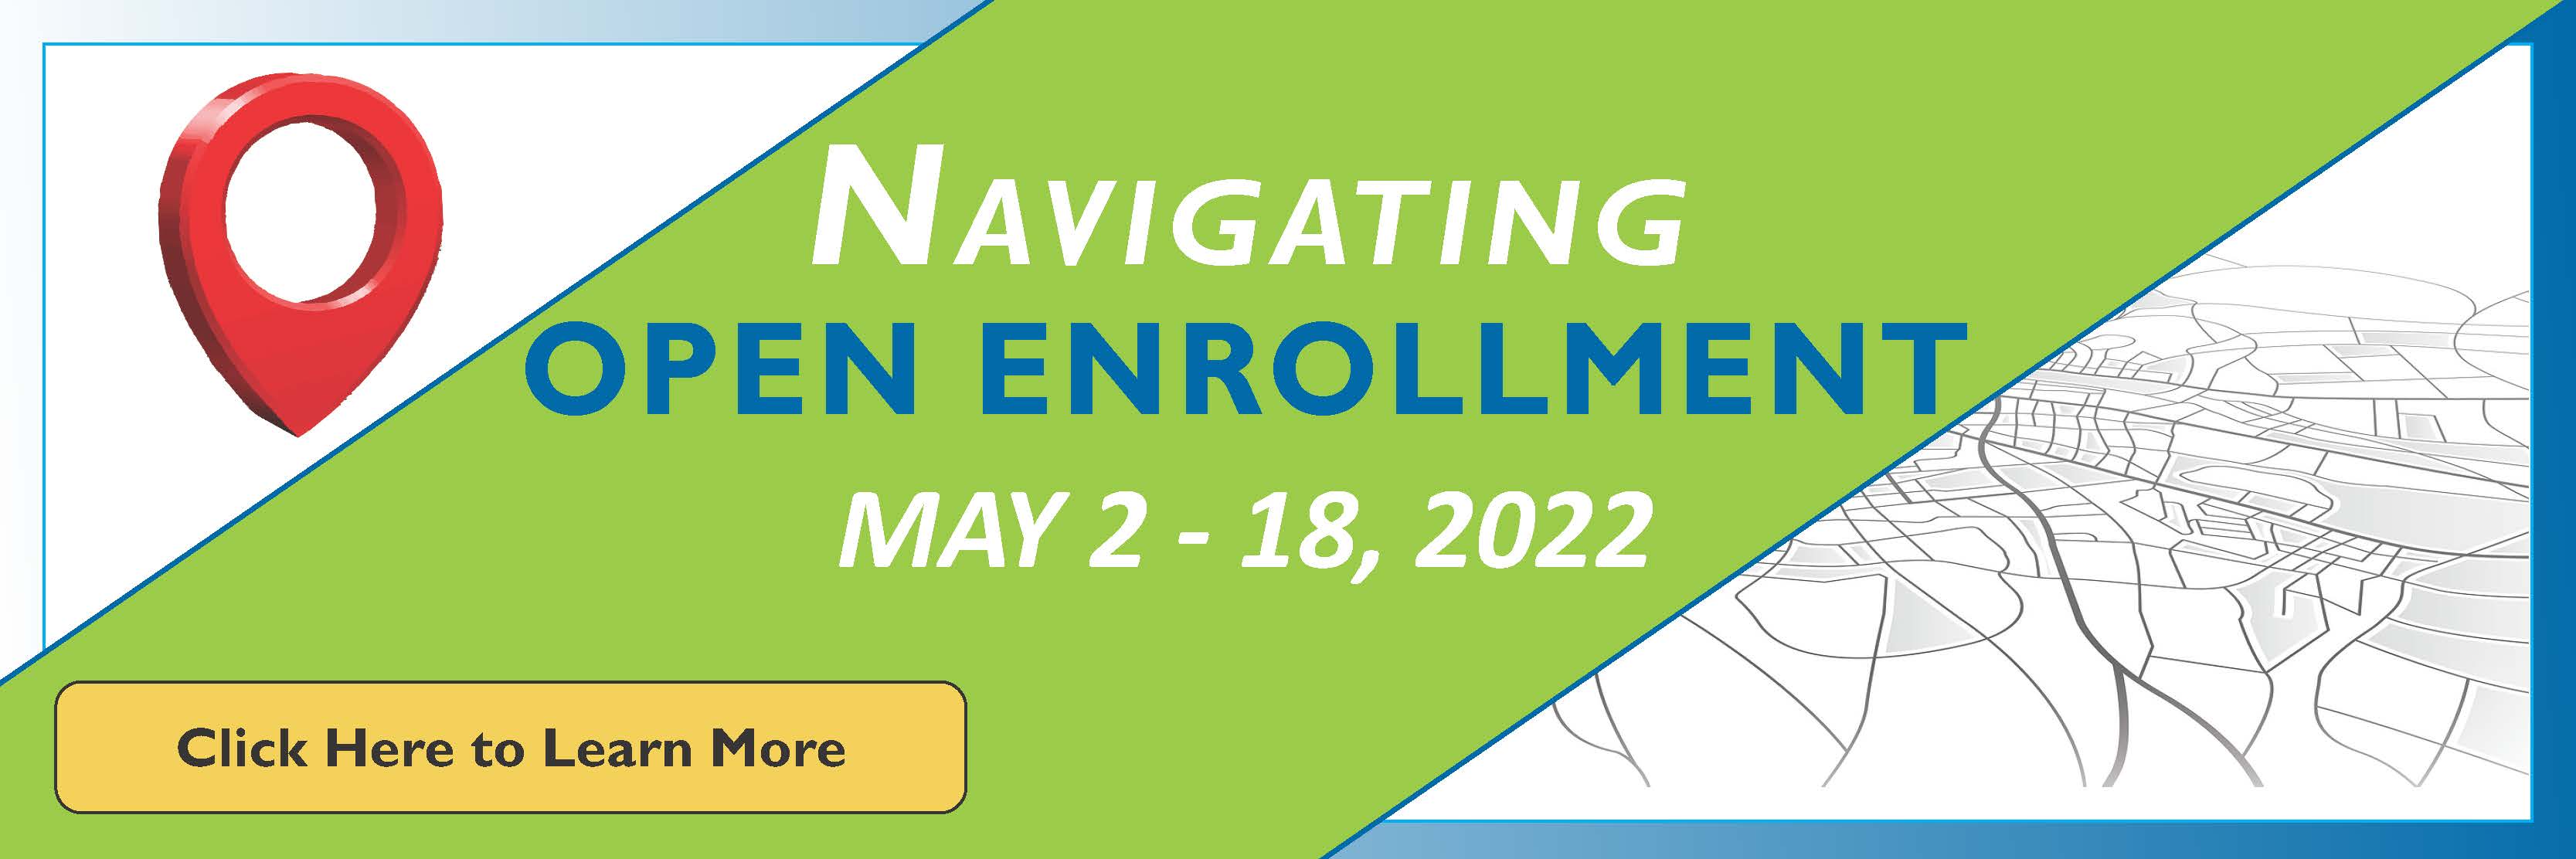 Navigating Open Enrollment - May 2-18